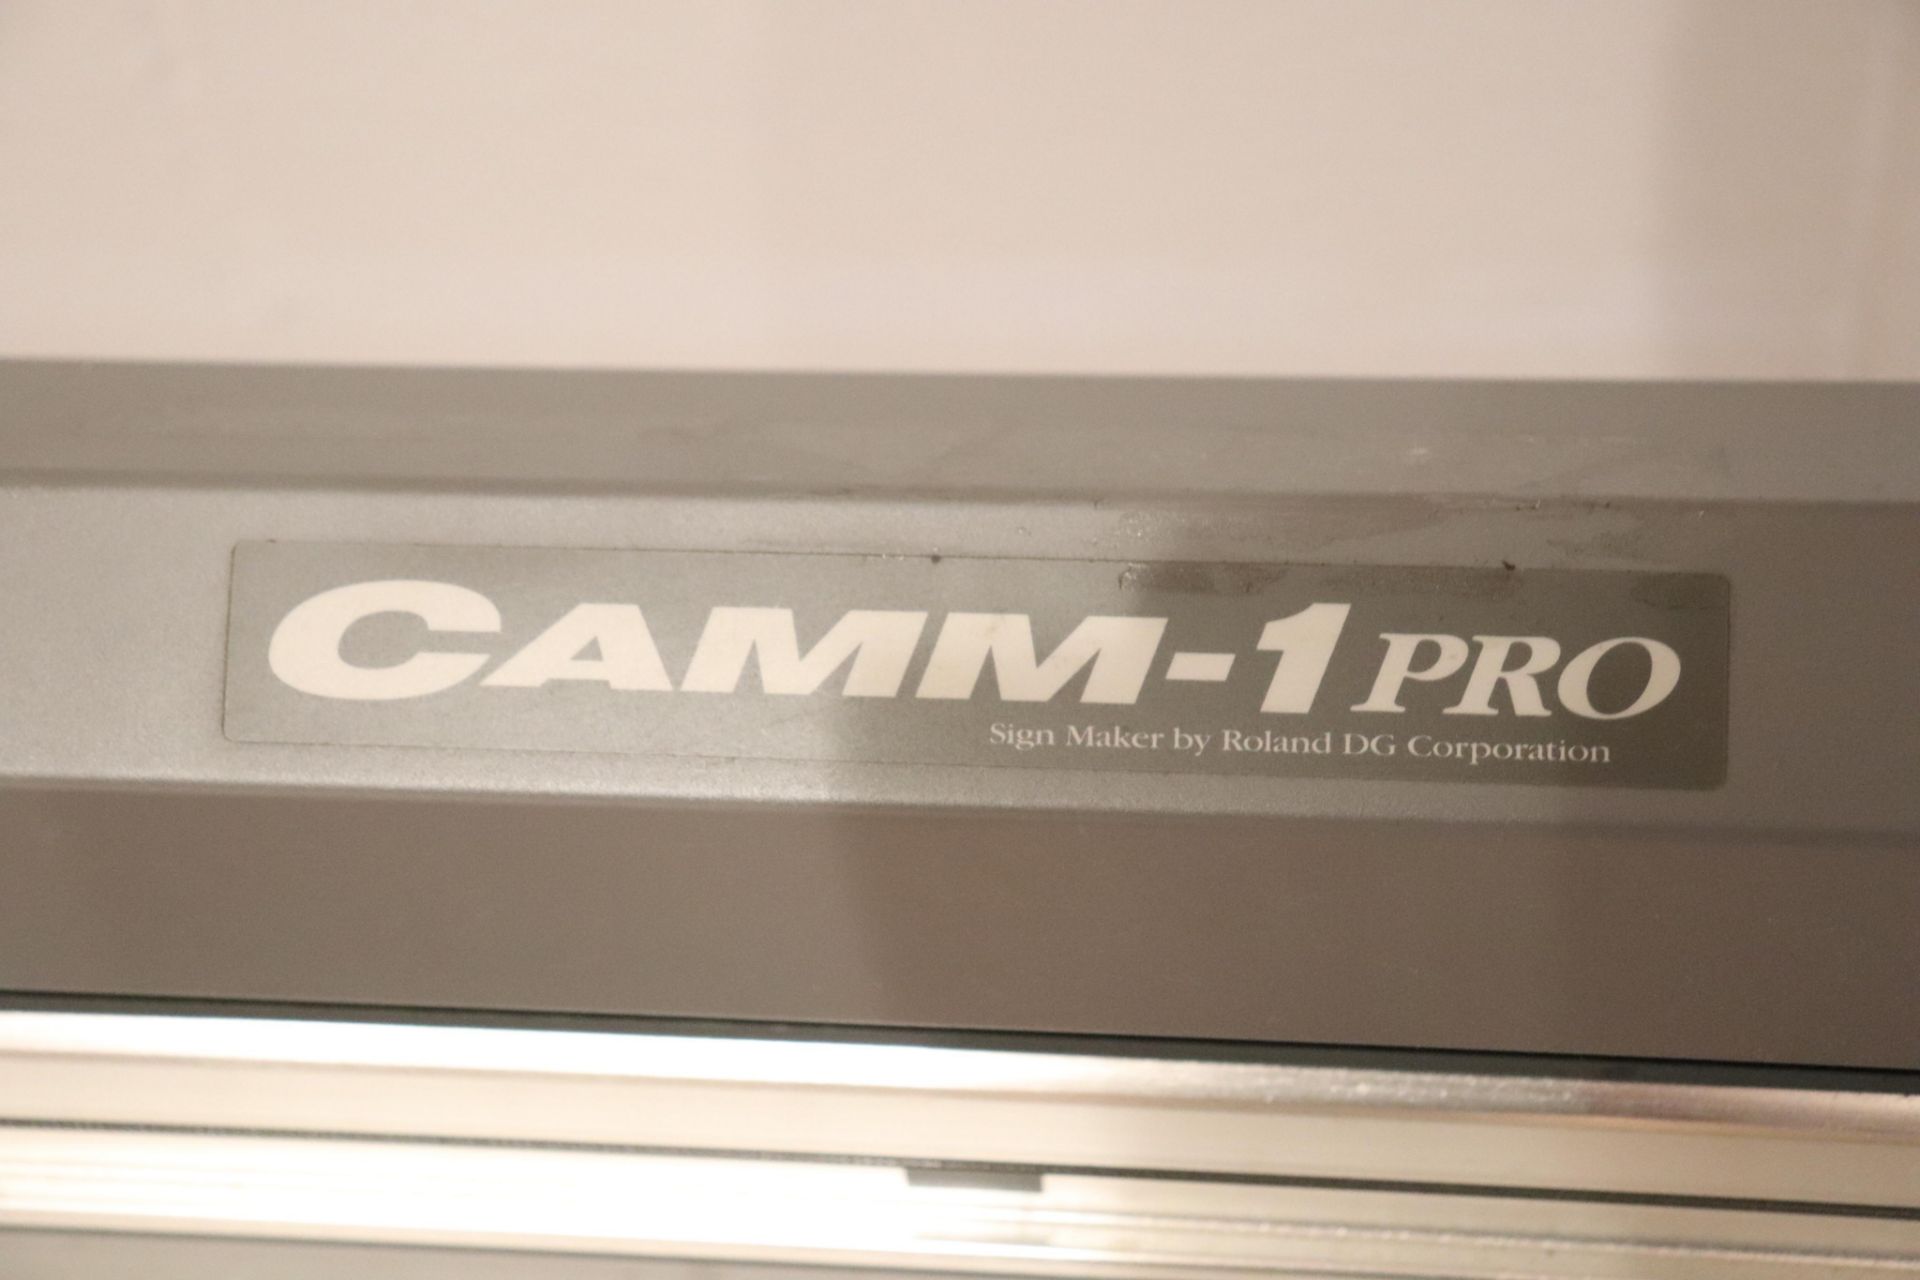 Roland Camm-1 Pro No. CX-300 vinyl cutter - Image 3 of 6